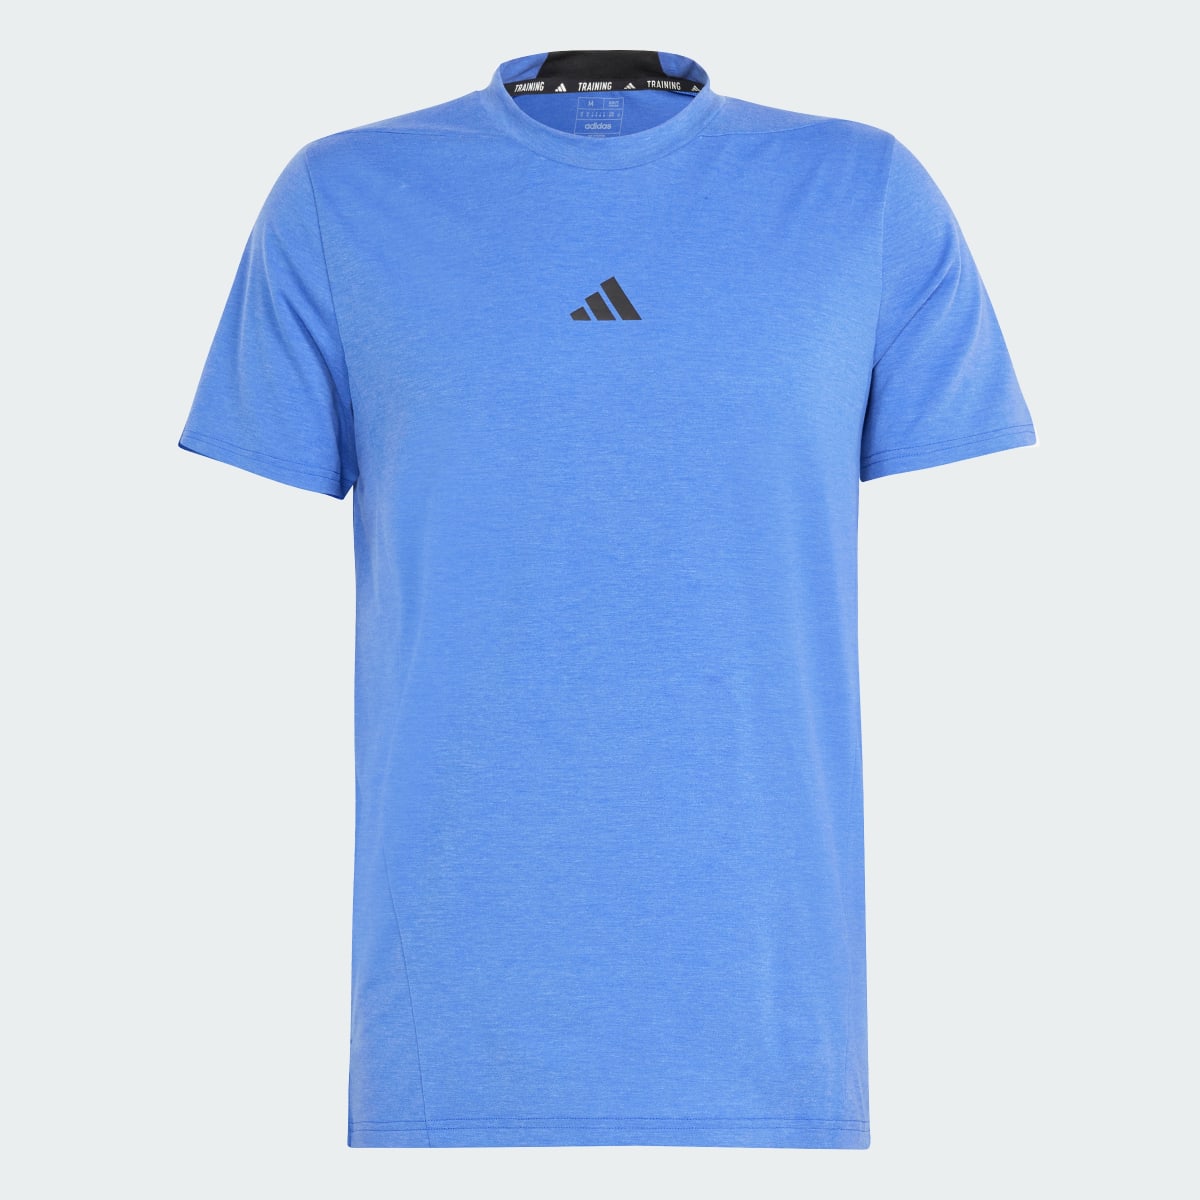 Adidas T-shirt Designed for Training Workout. 4